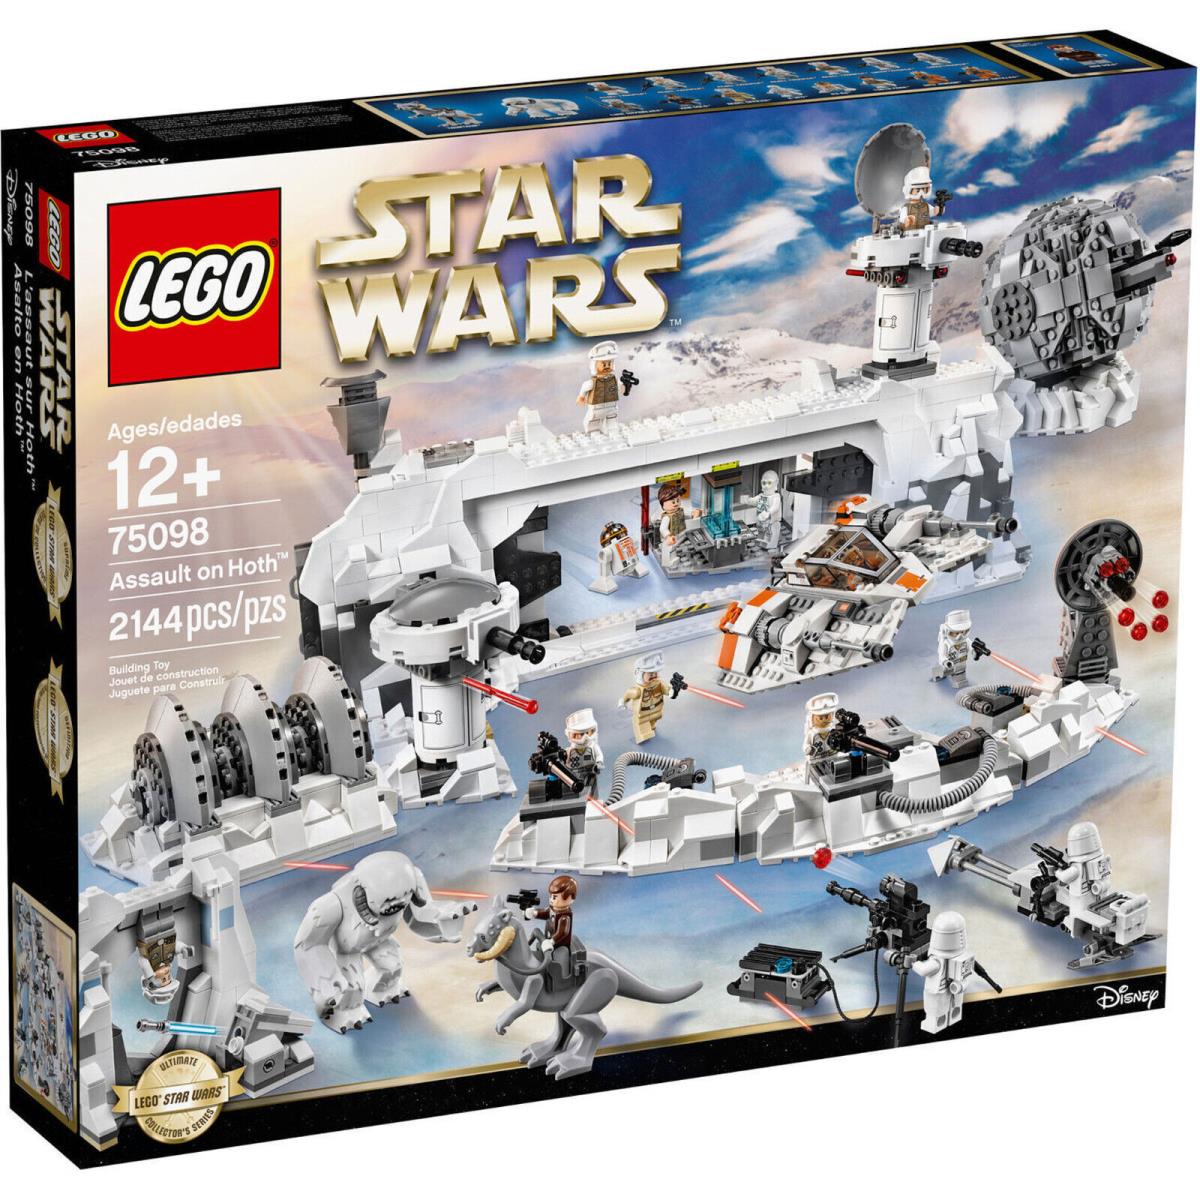 Lego Star Wars 75098 Assault on Hoth - --- See Description